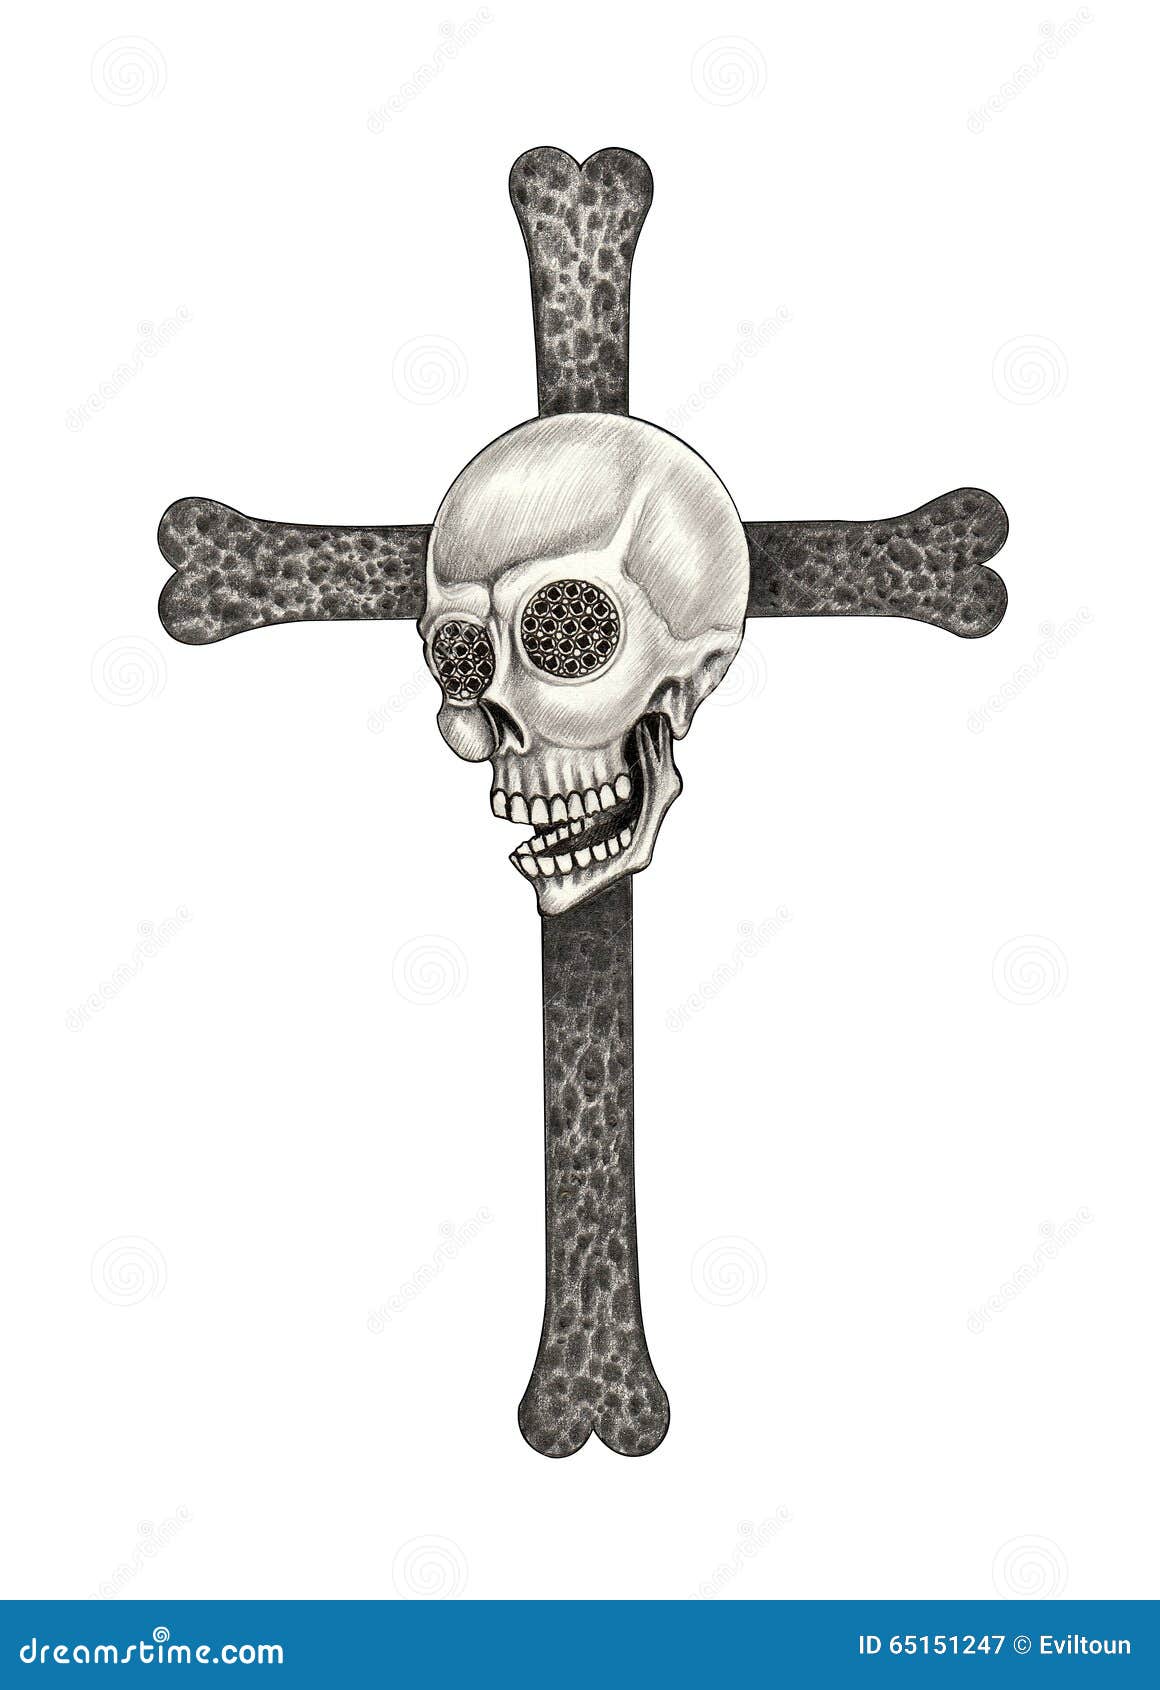 Art skull cross tattoo. Art design head skull mix cross for tattoo hand pencil drawing on paper.